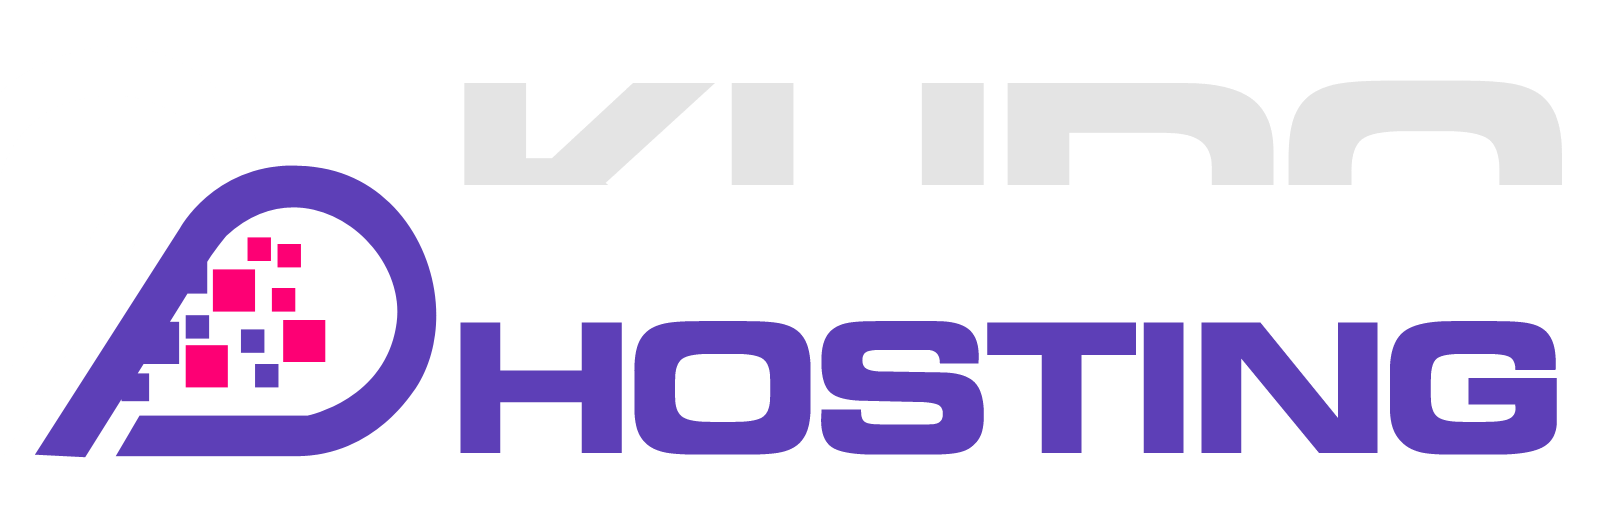 Hosting Logo - Kudo Hosting | Stable Web Hosting Solutions